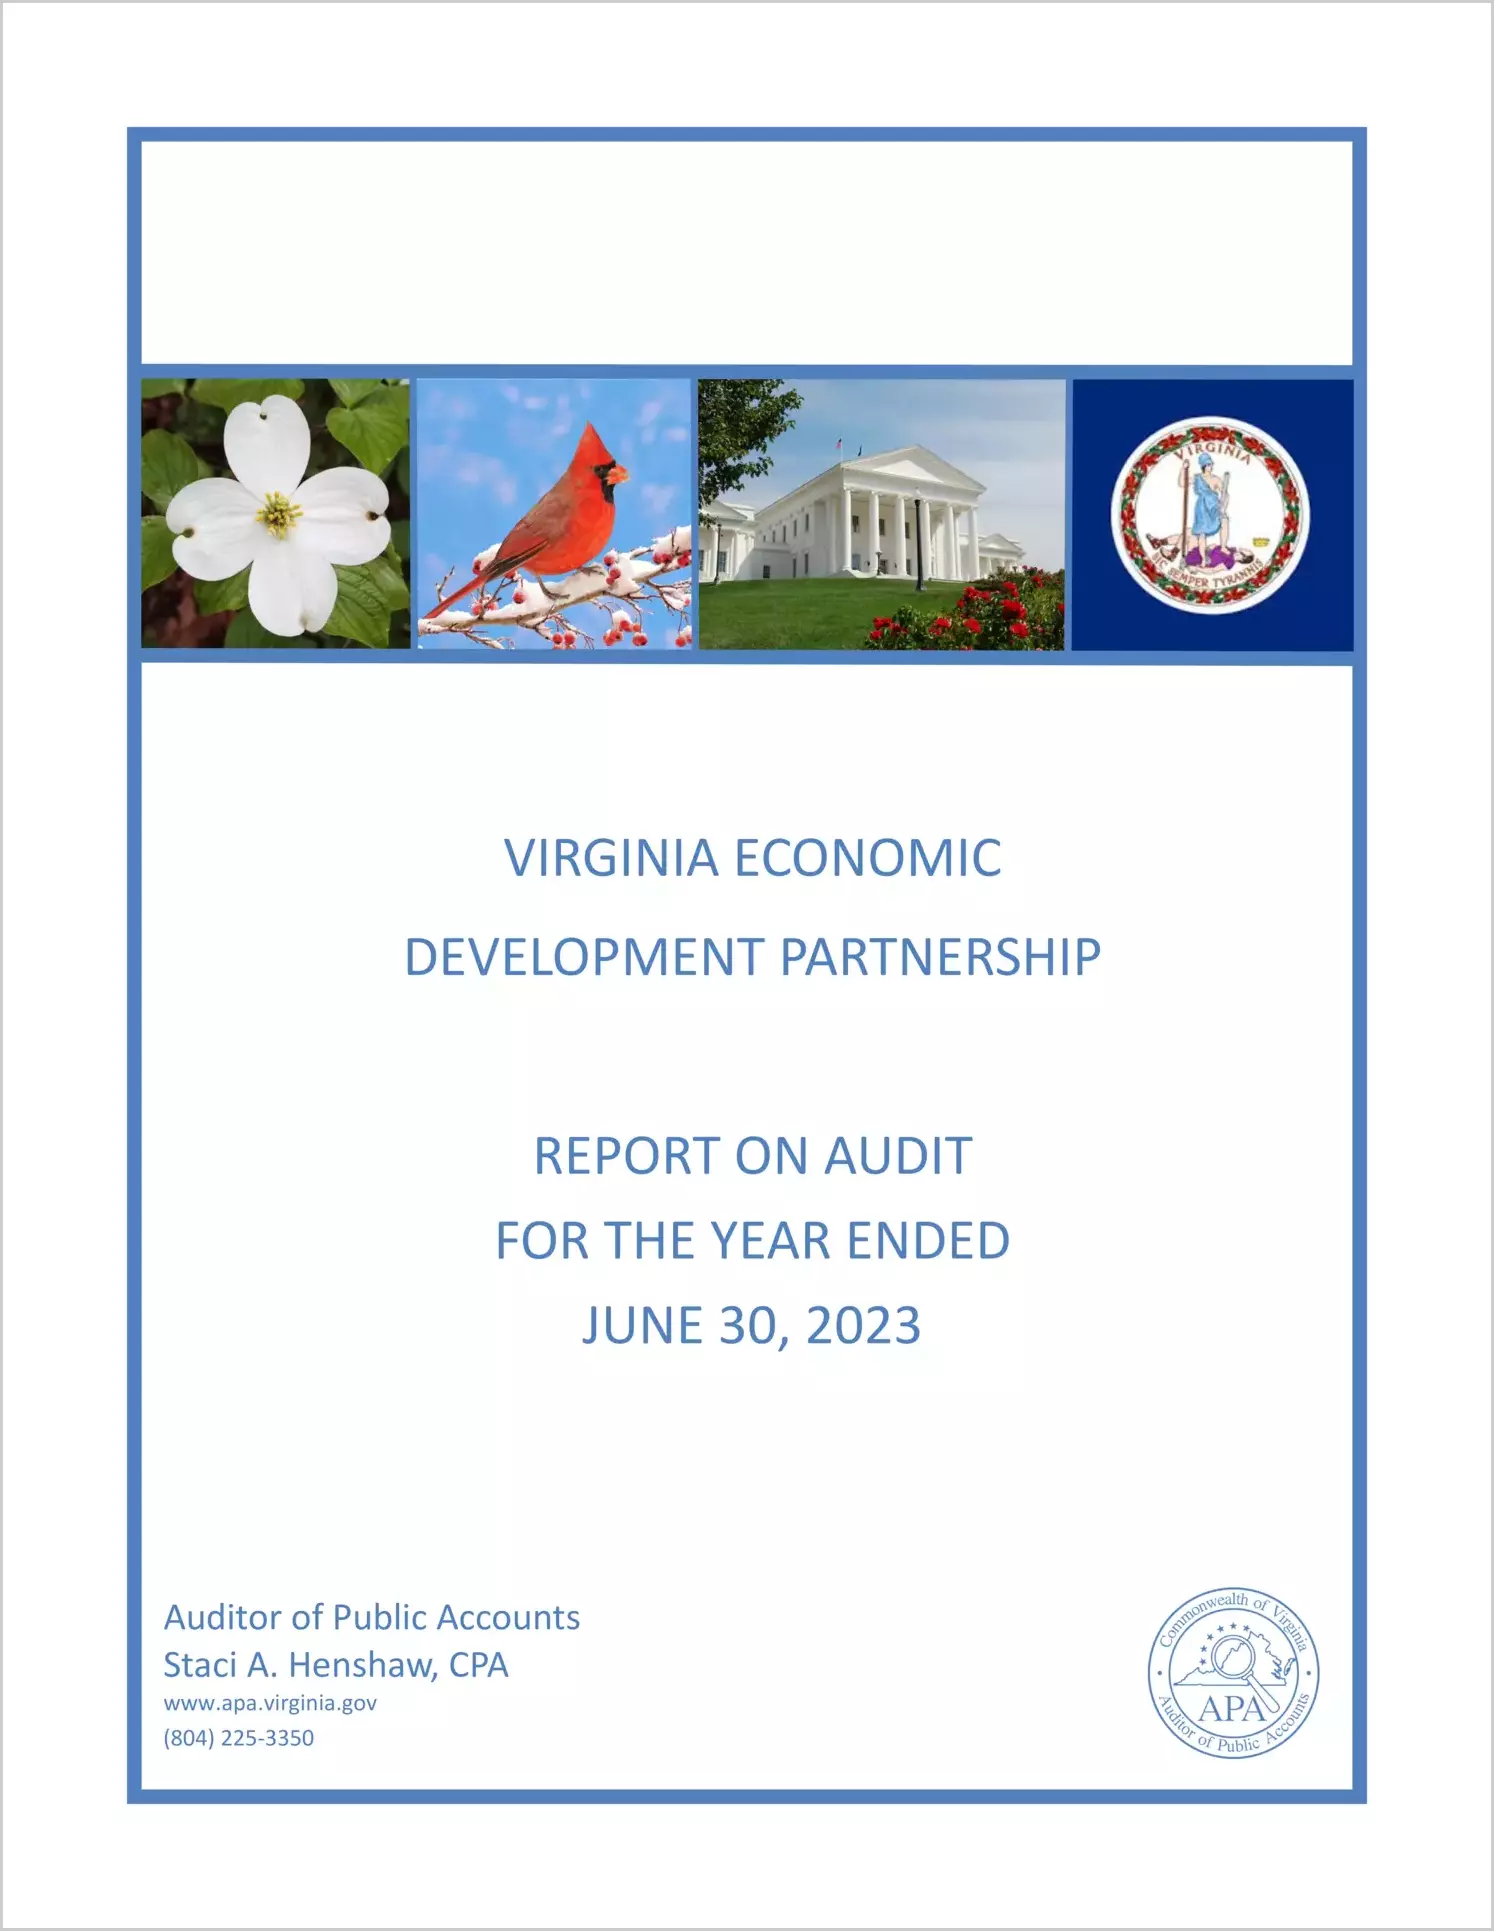 Virginia Economic Development Partnership for the year ended June 30, 2023